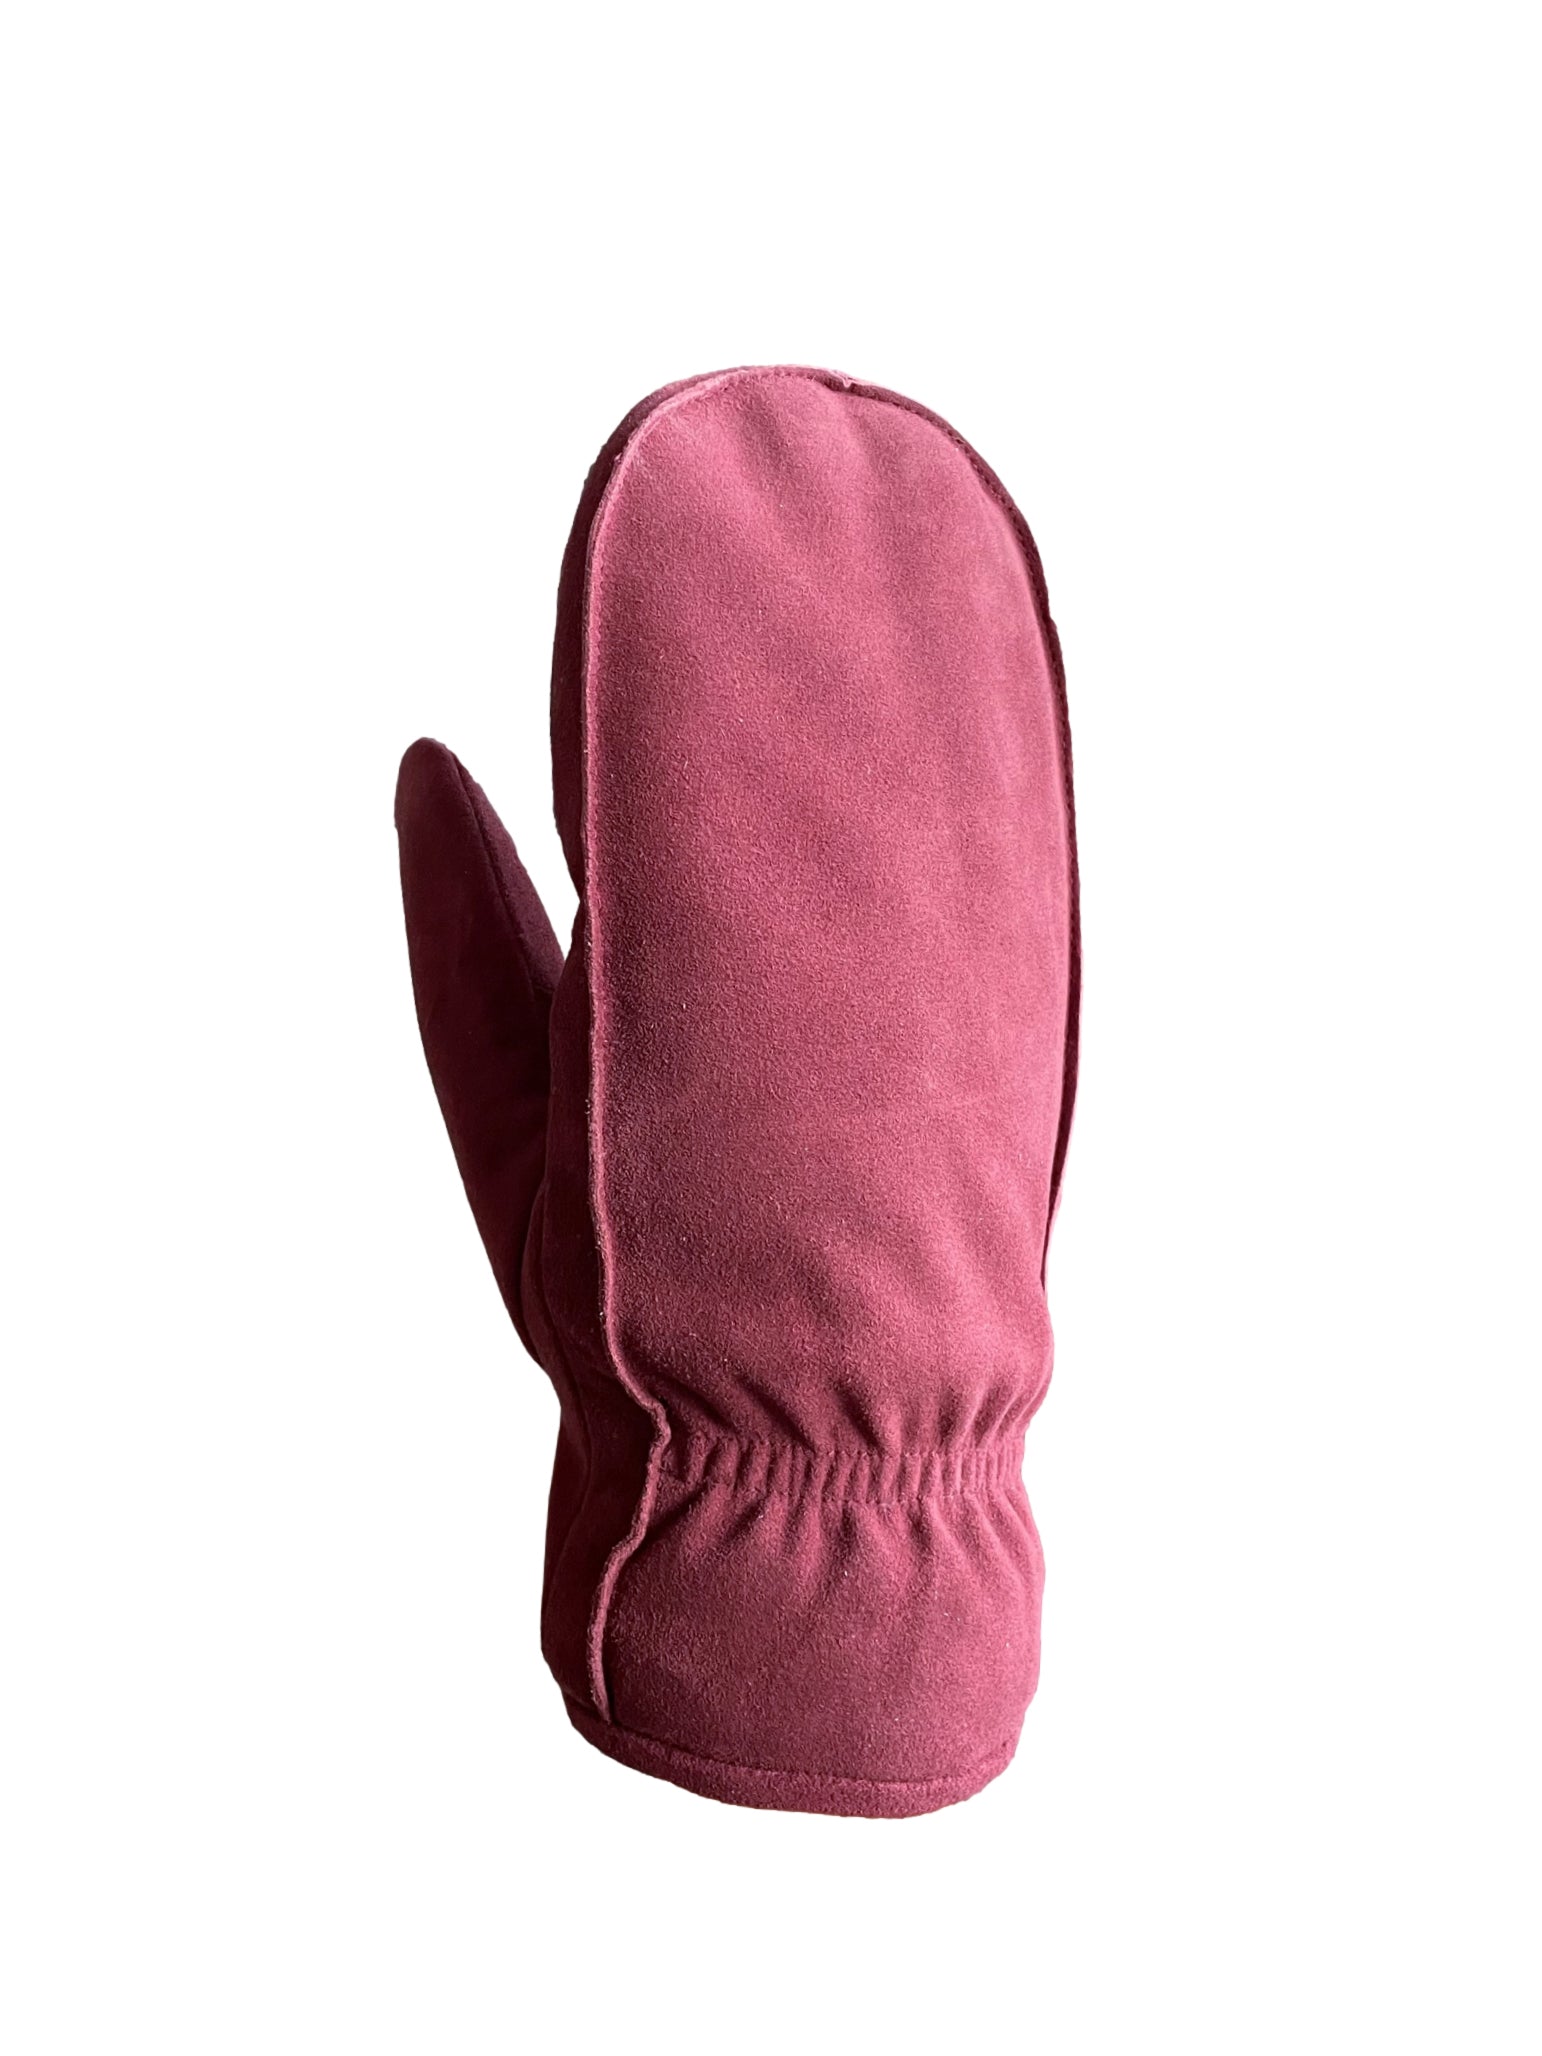 Ladies Suede Mitt With Glove Dry Rose